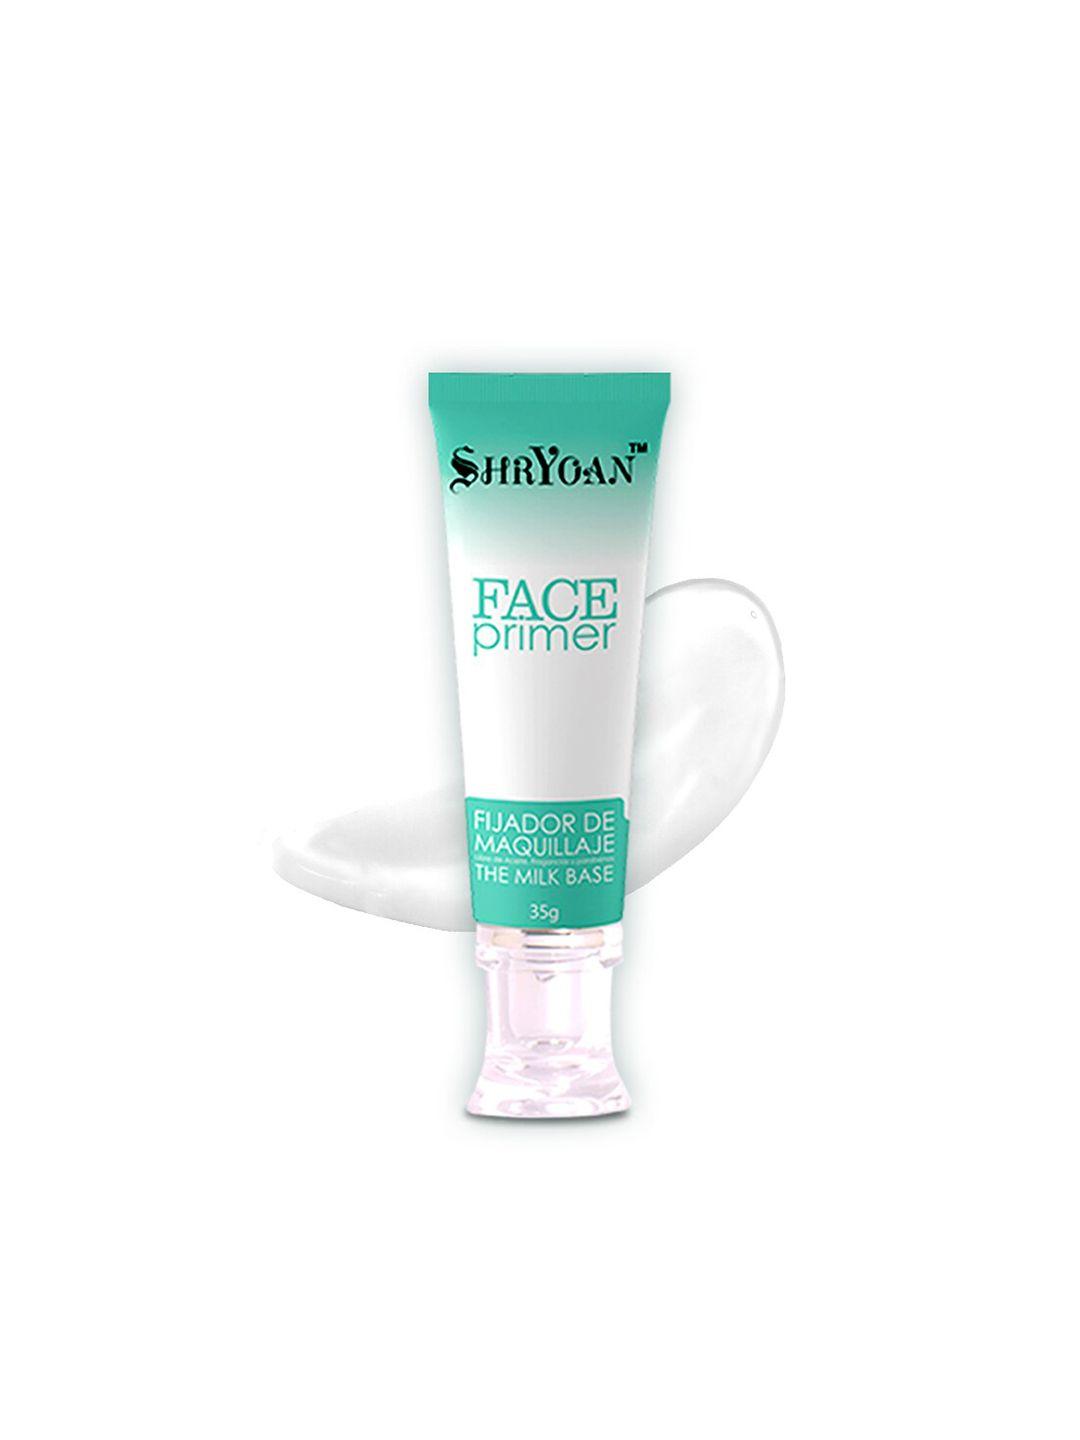 shryoan-milk-base-makeup-face-primer